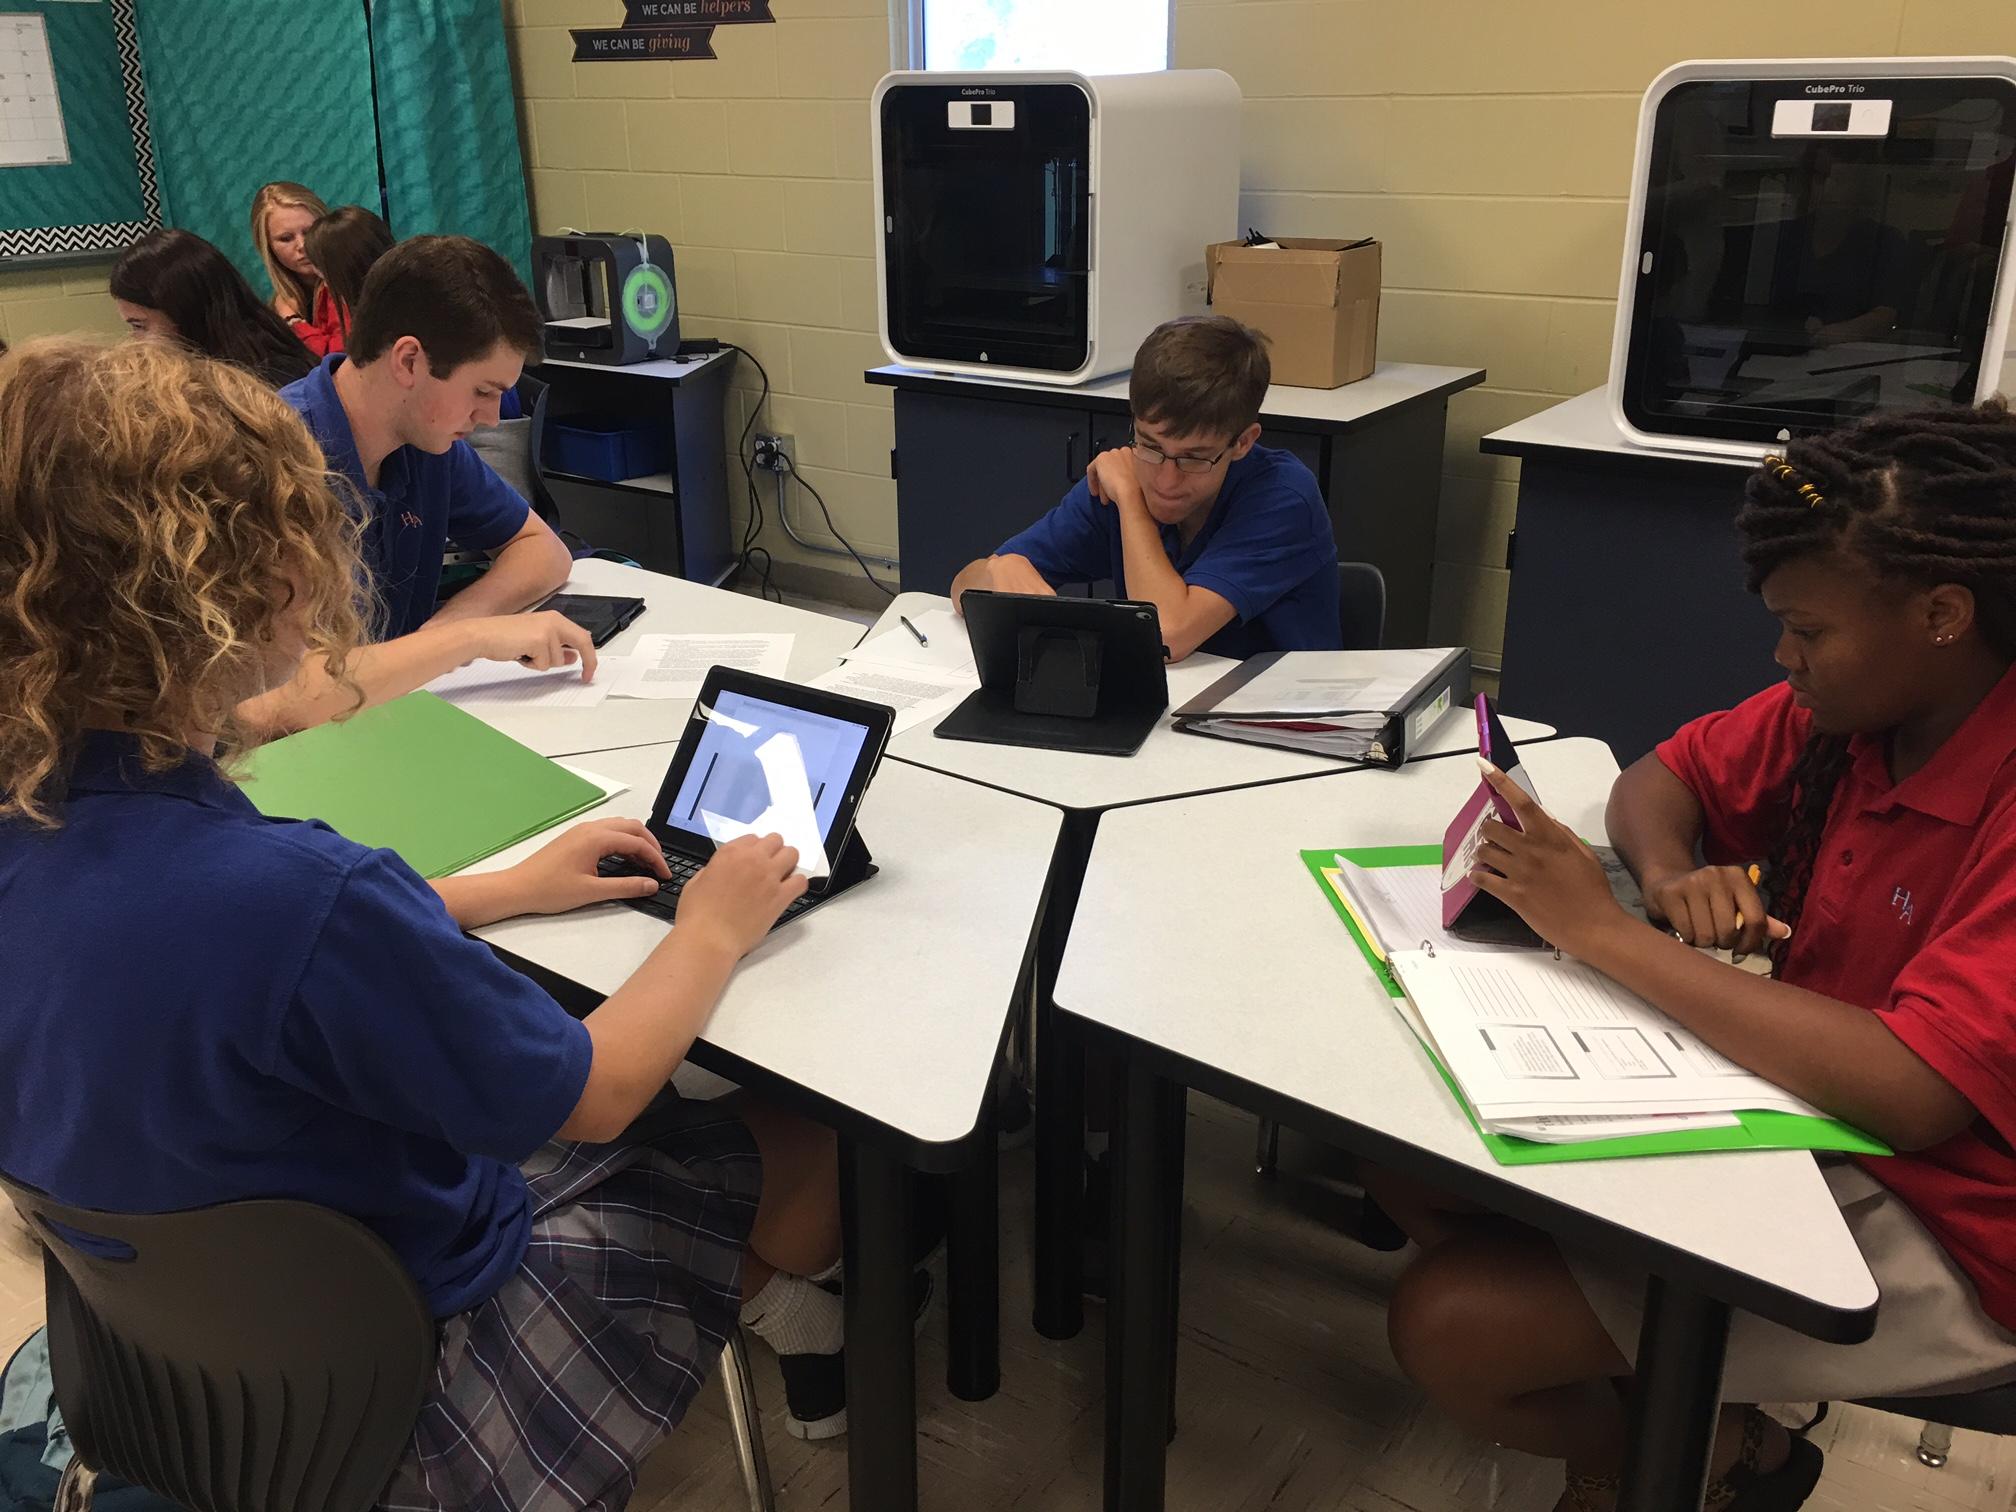 iPad environment in the classroom